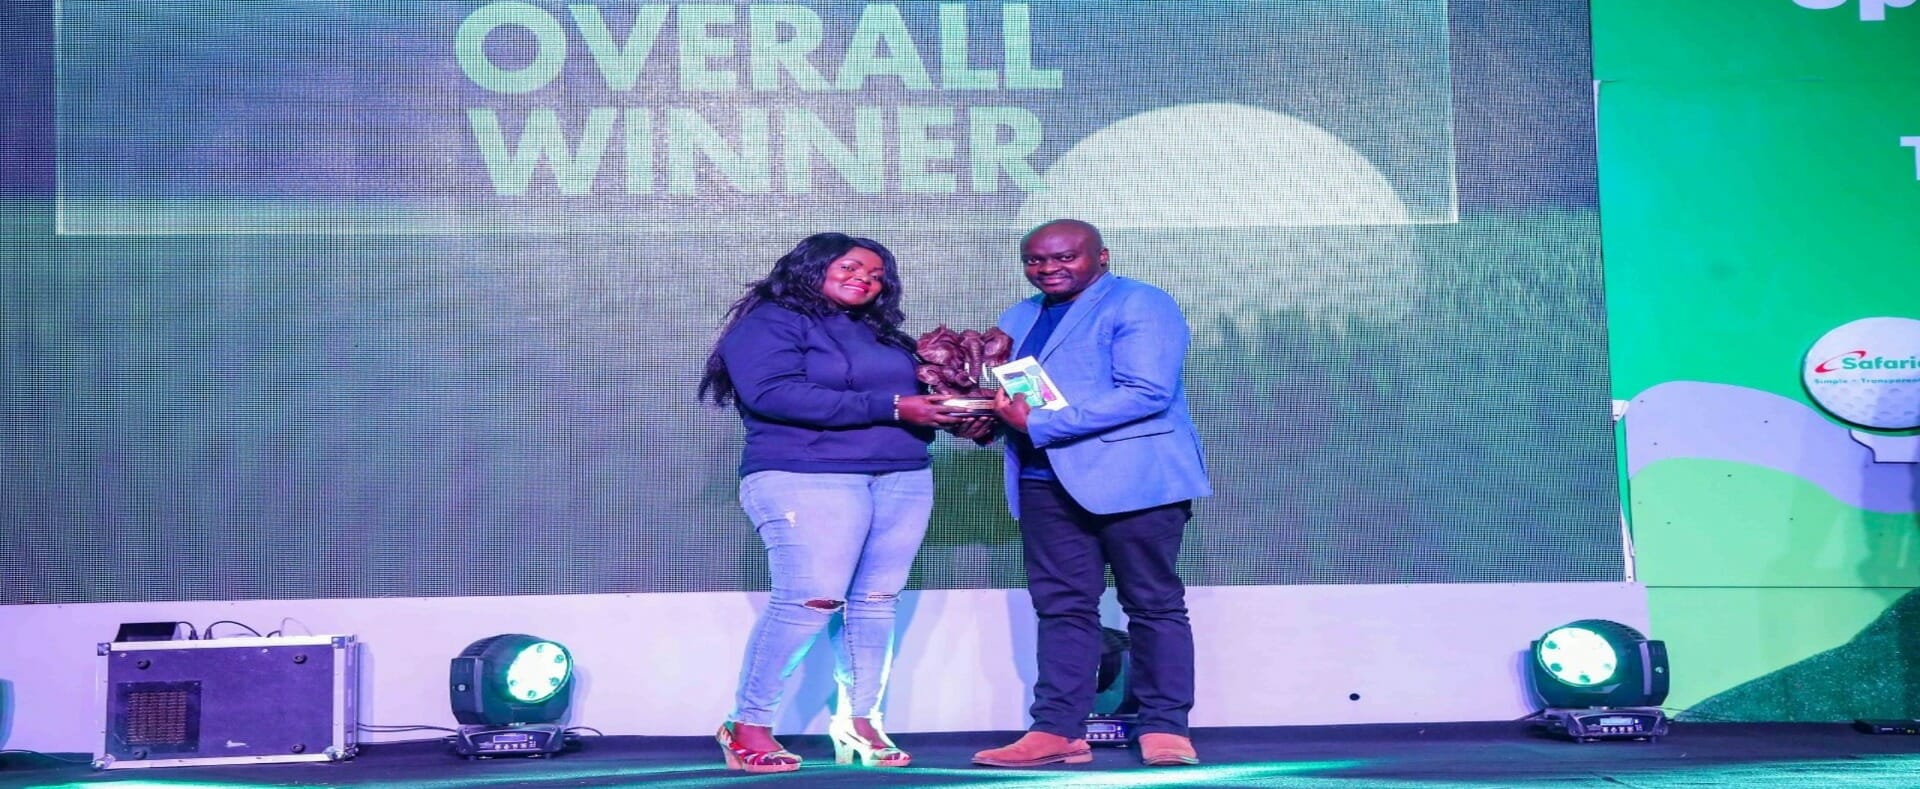 Eldoret Leg Produces First Safaricom Staff Winner